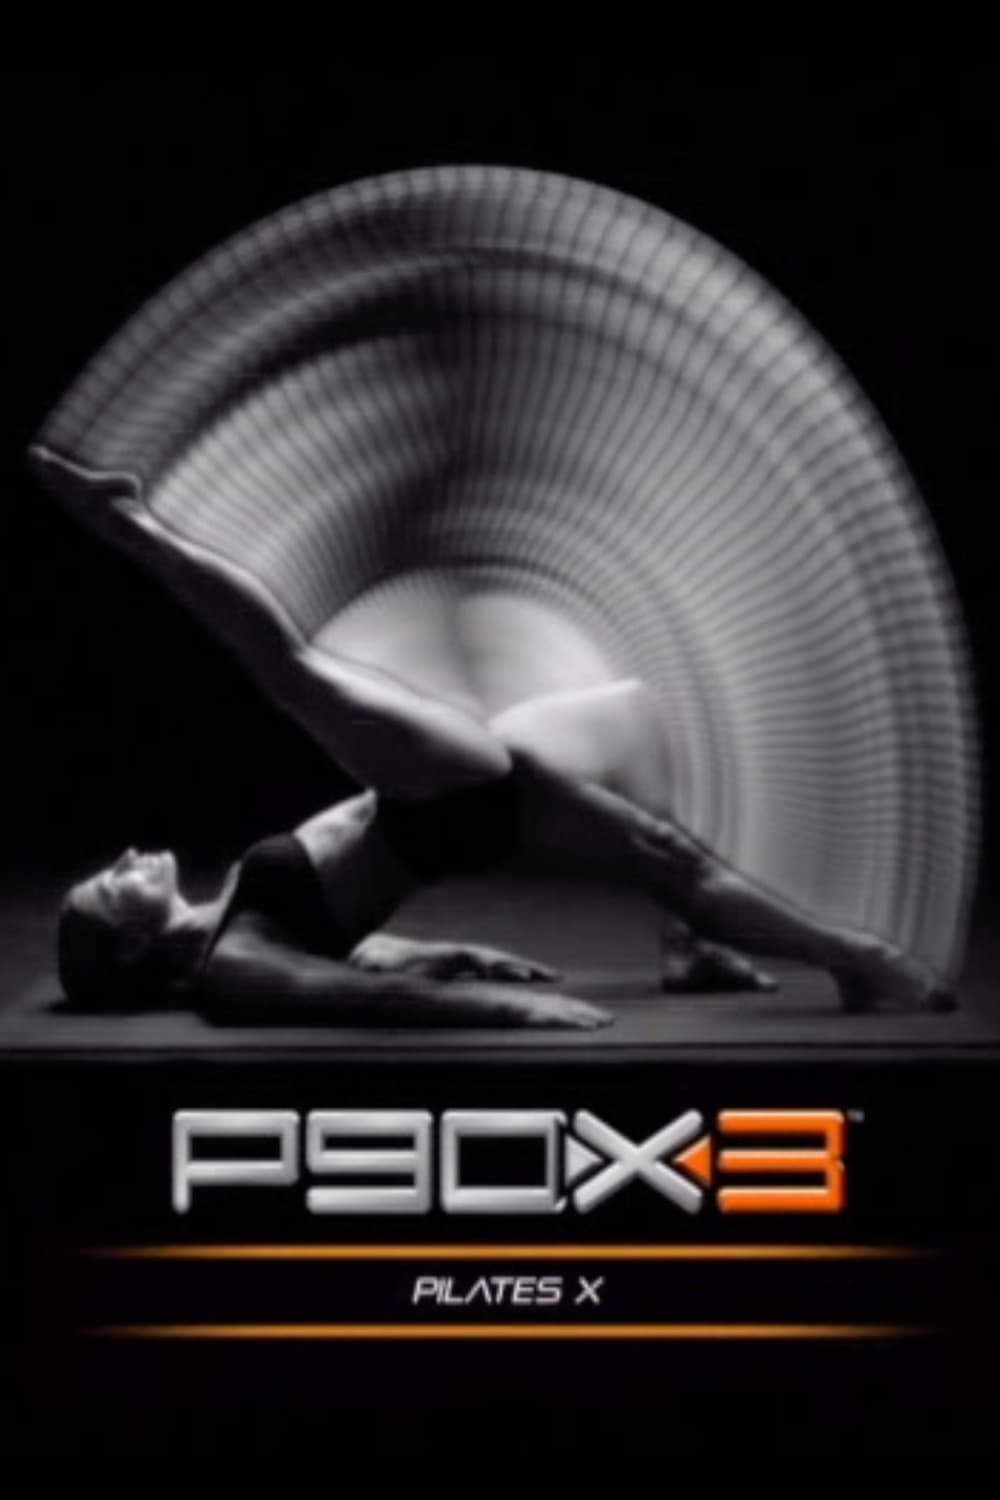 P90X3 - Pilates X